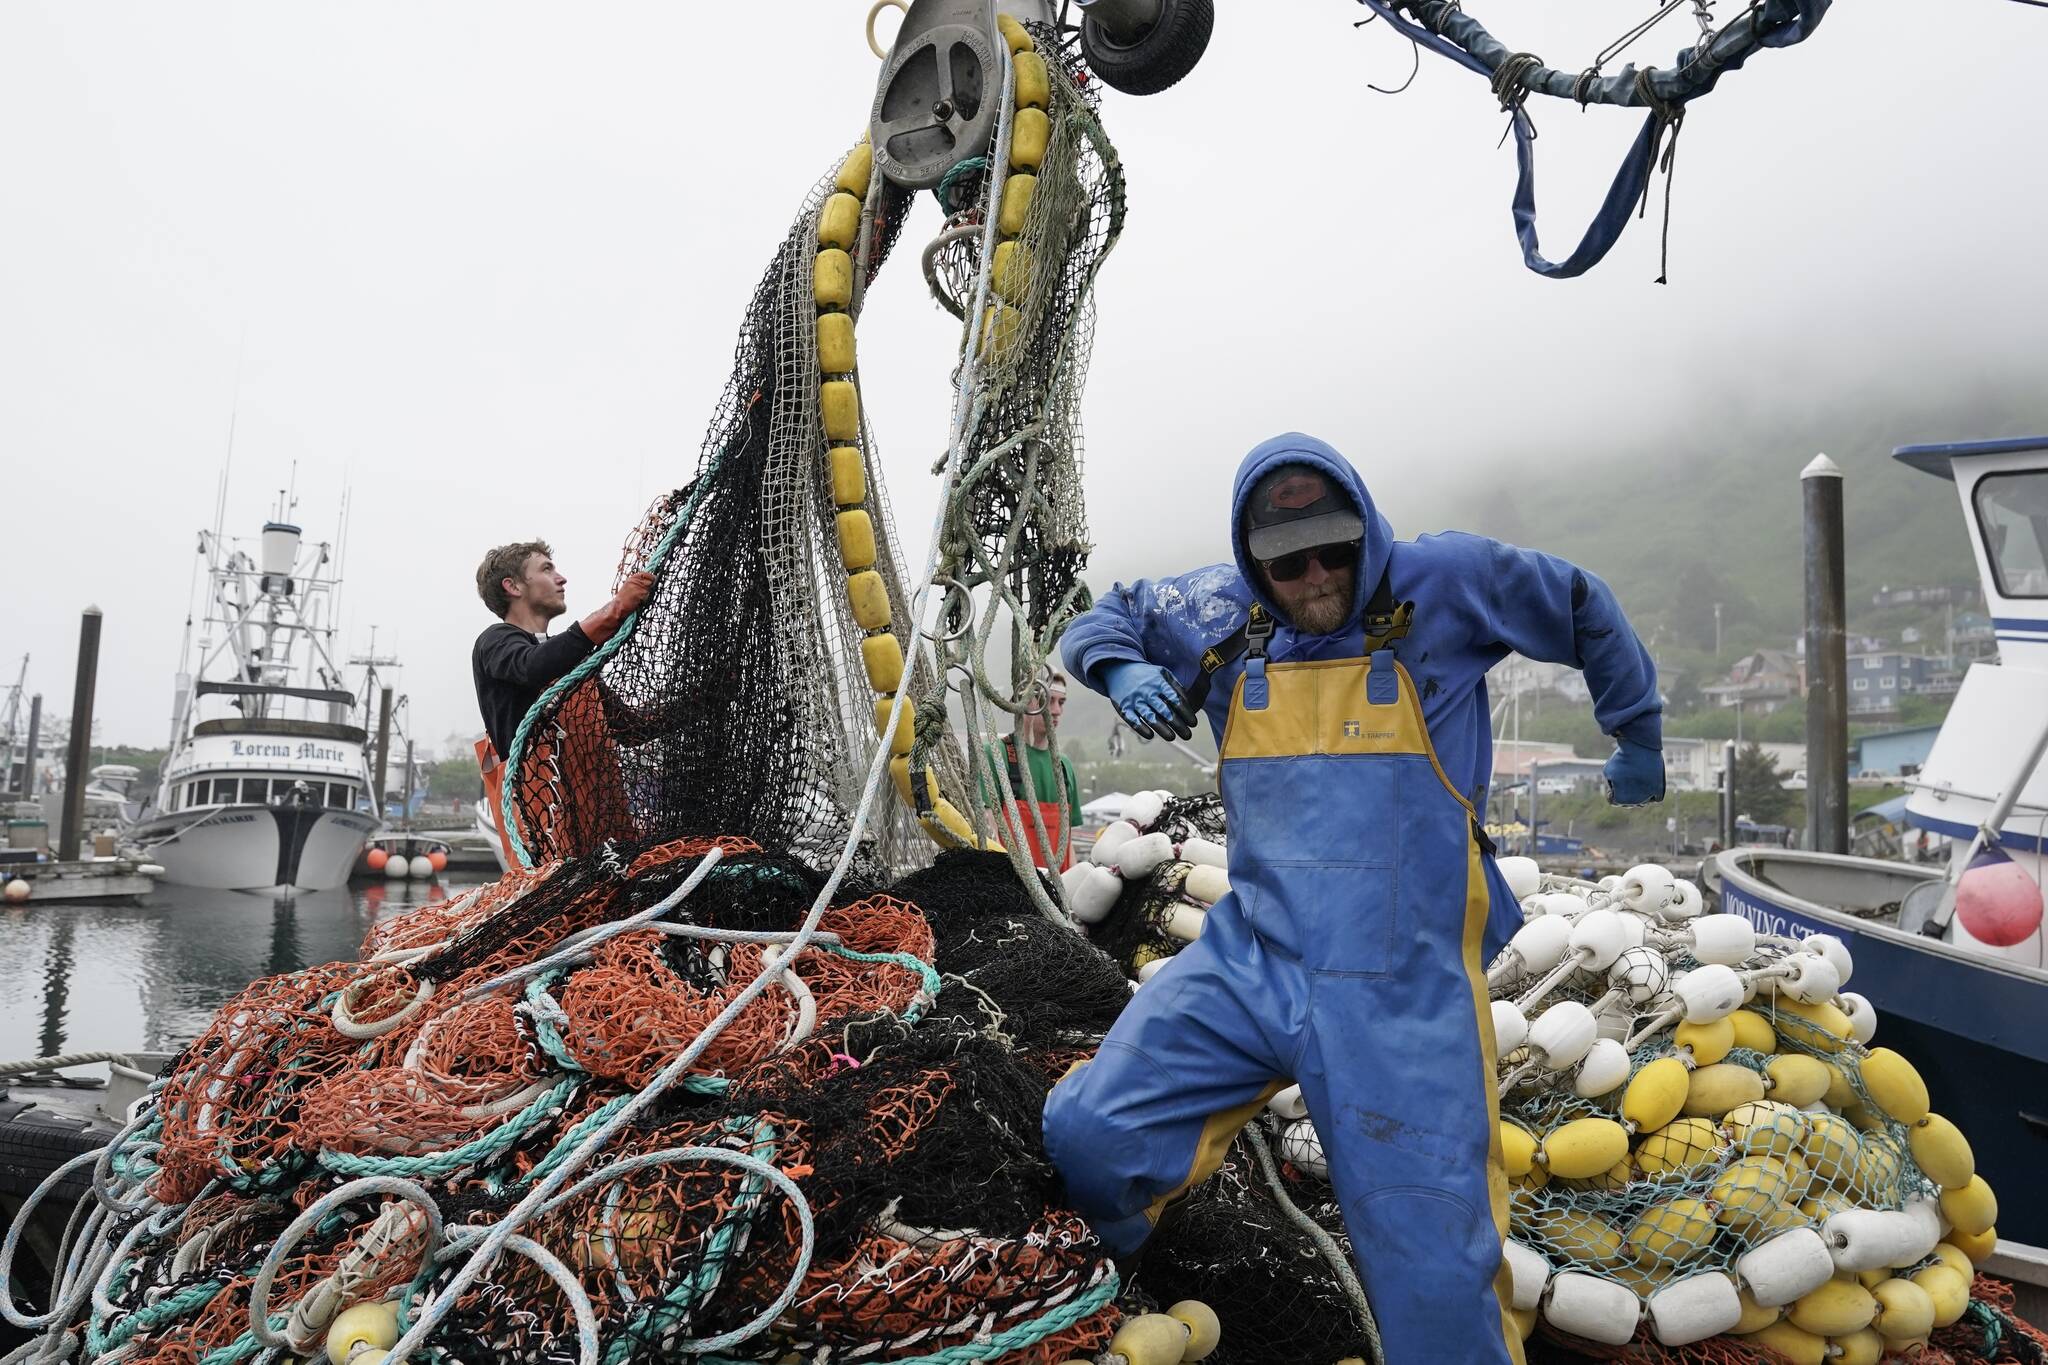 Salmon fisherman stack their nets June 22 in Kodiak. (AP Photo/Joshua A. Bickel, File)